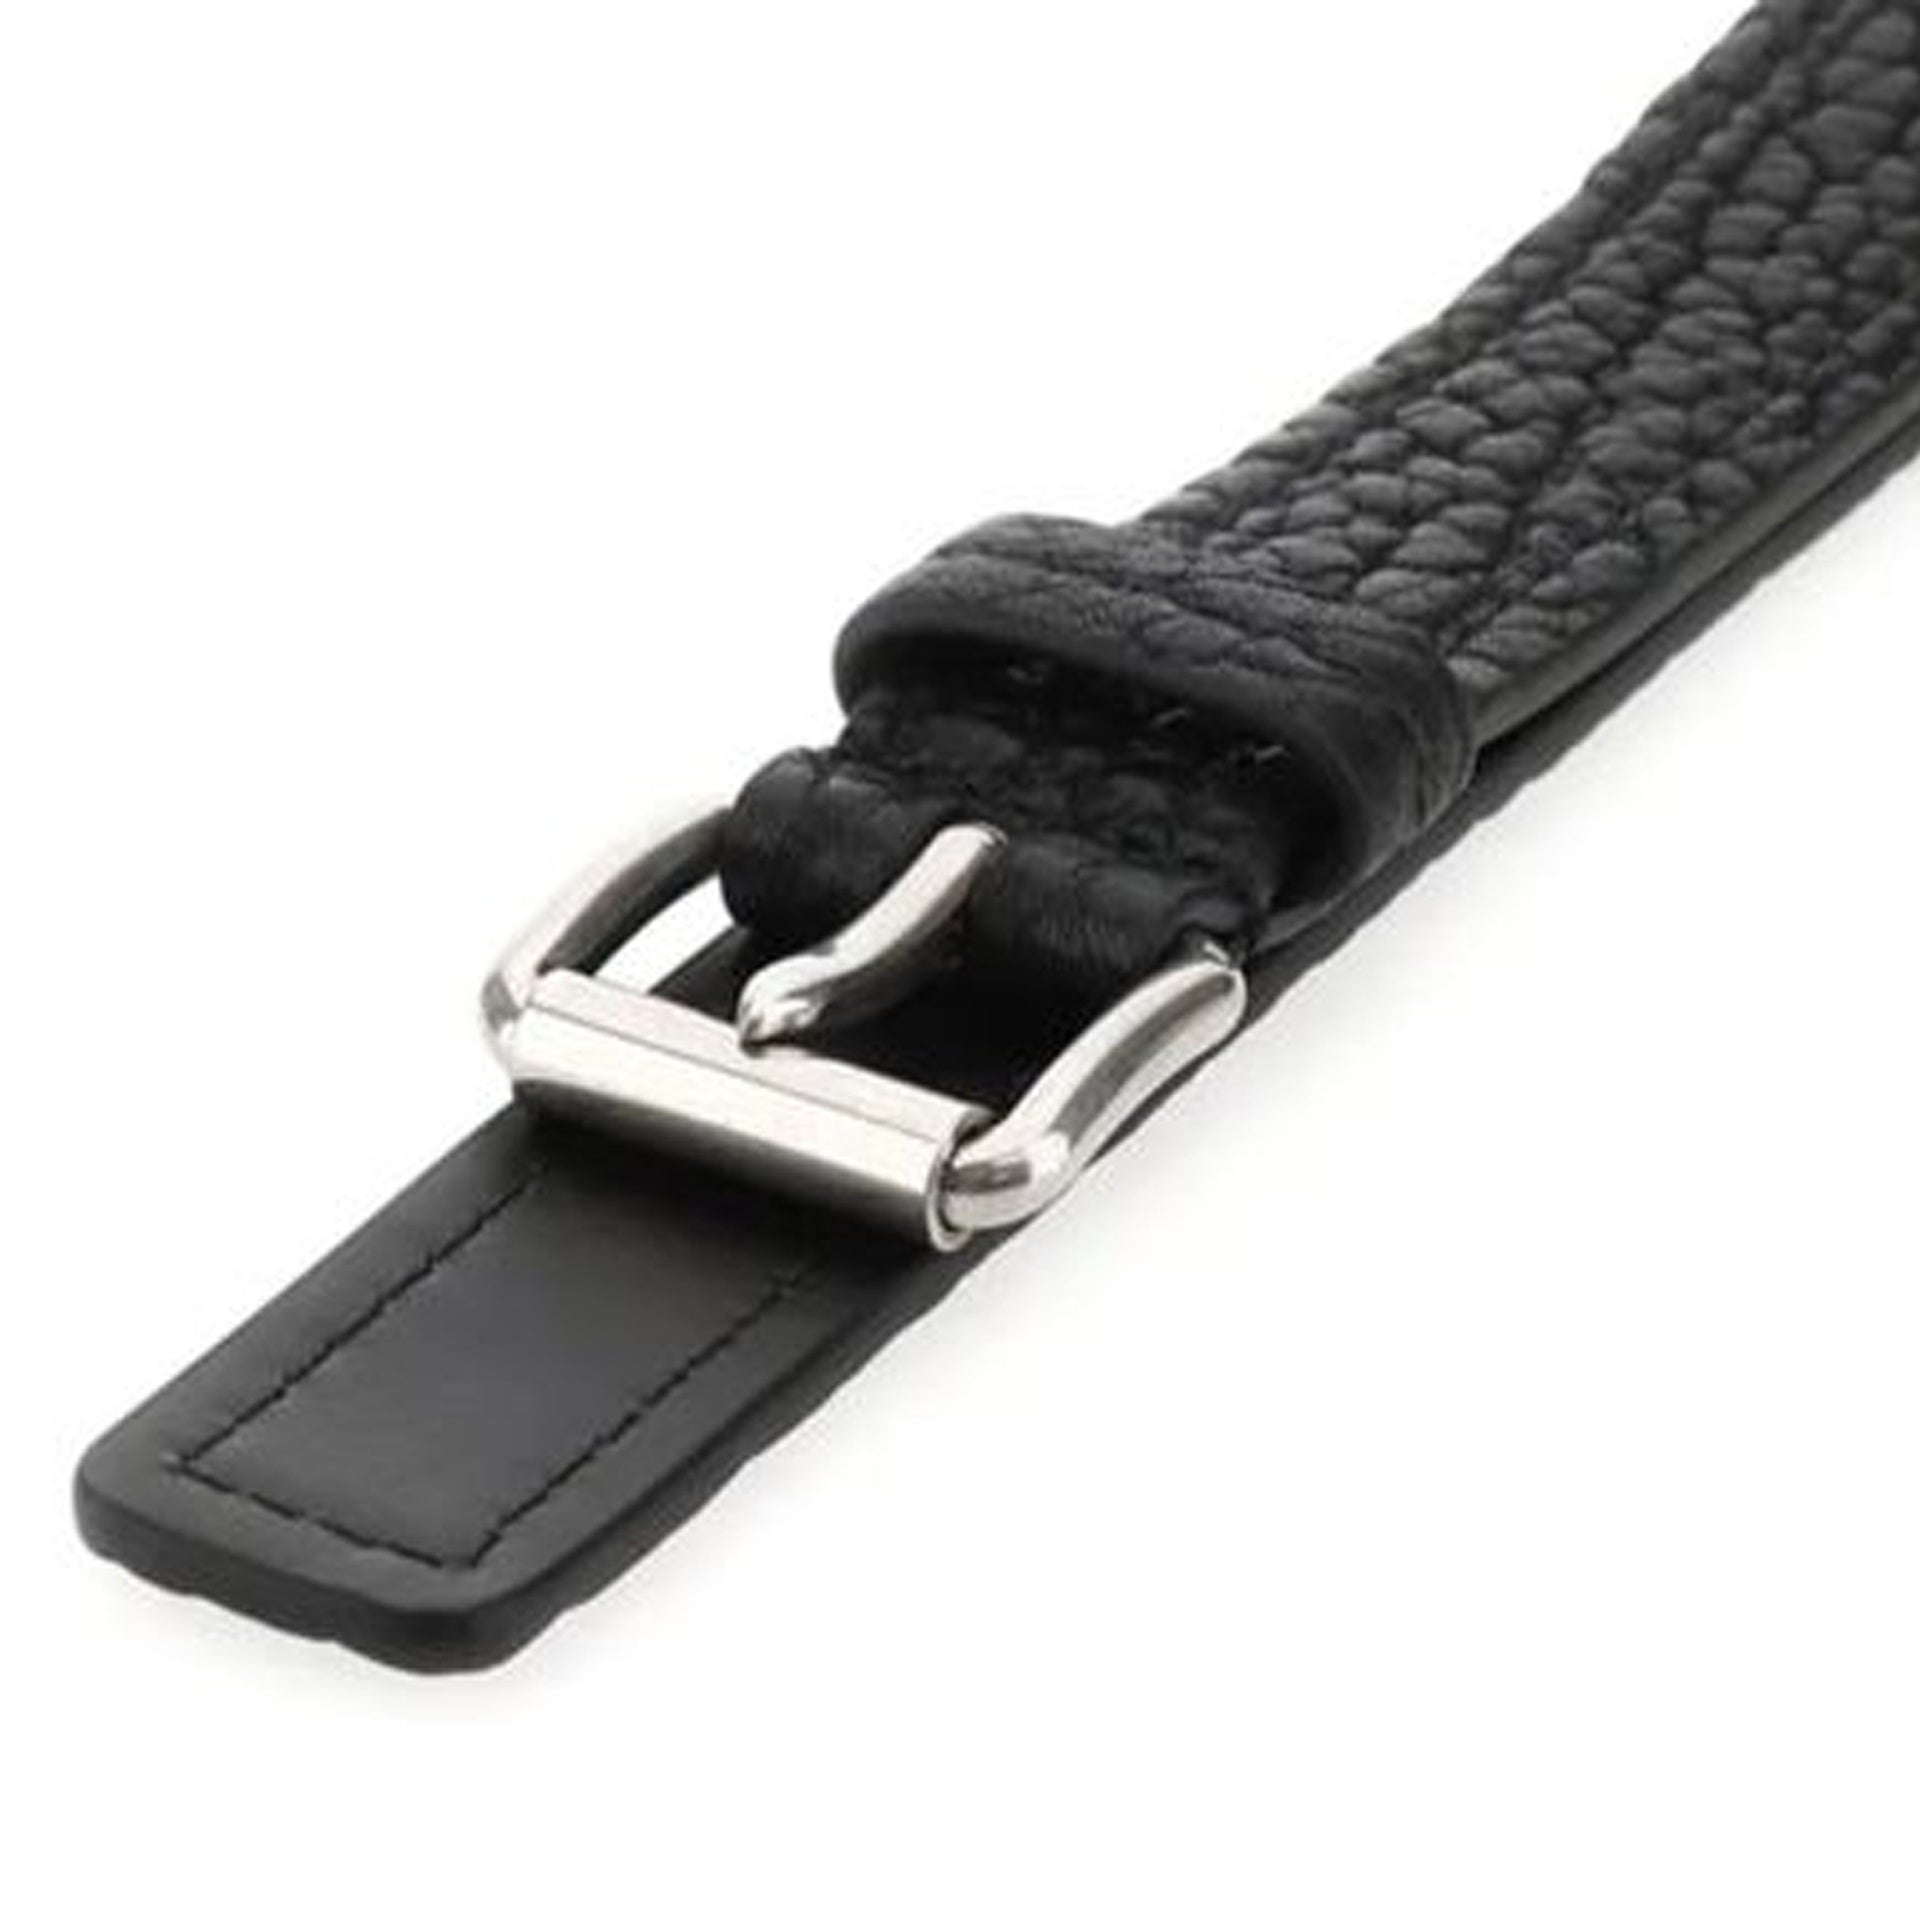 PRADA-Outlet-Sale-PRADA Leather Belt-MEN ACCESSORIES-ARCHIVIST